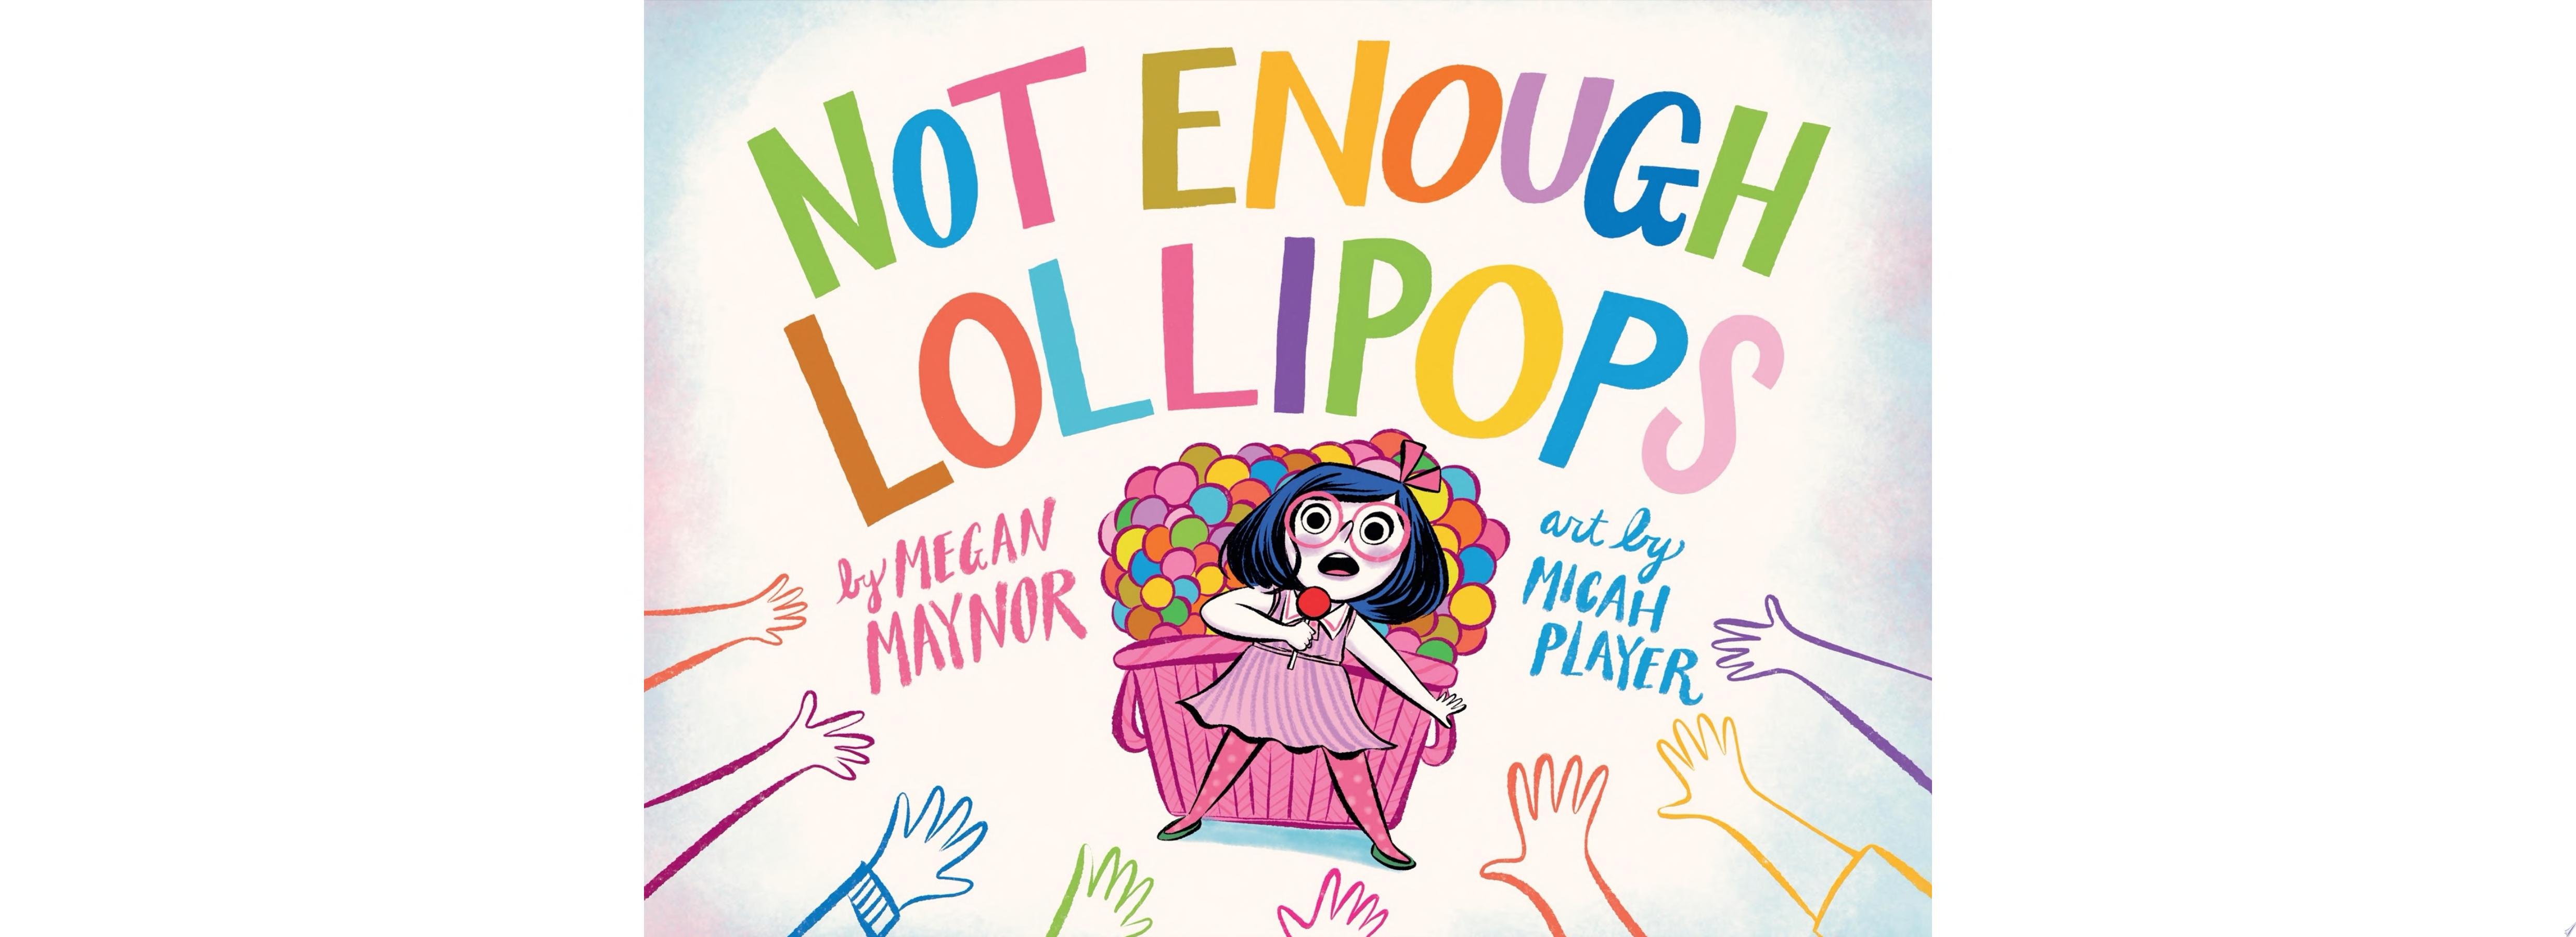 Image for "Not Enough Lollipops"